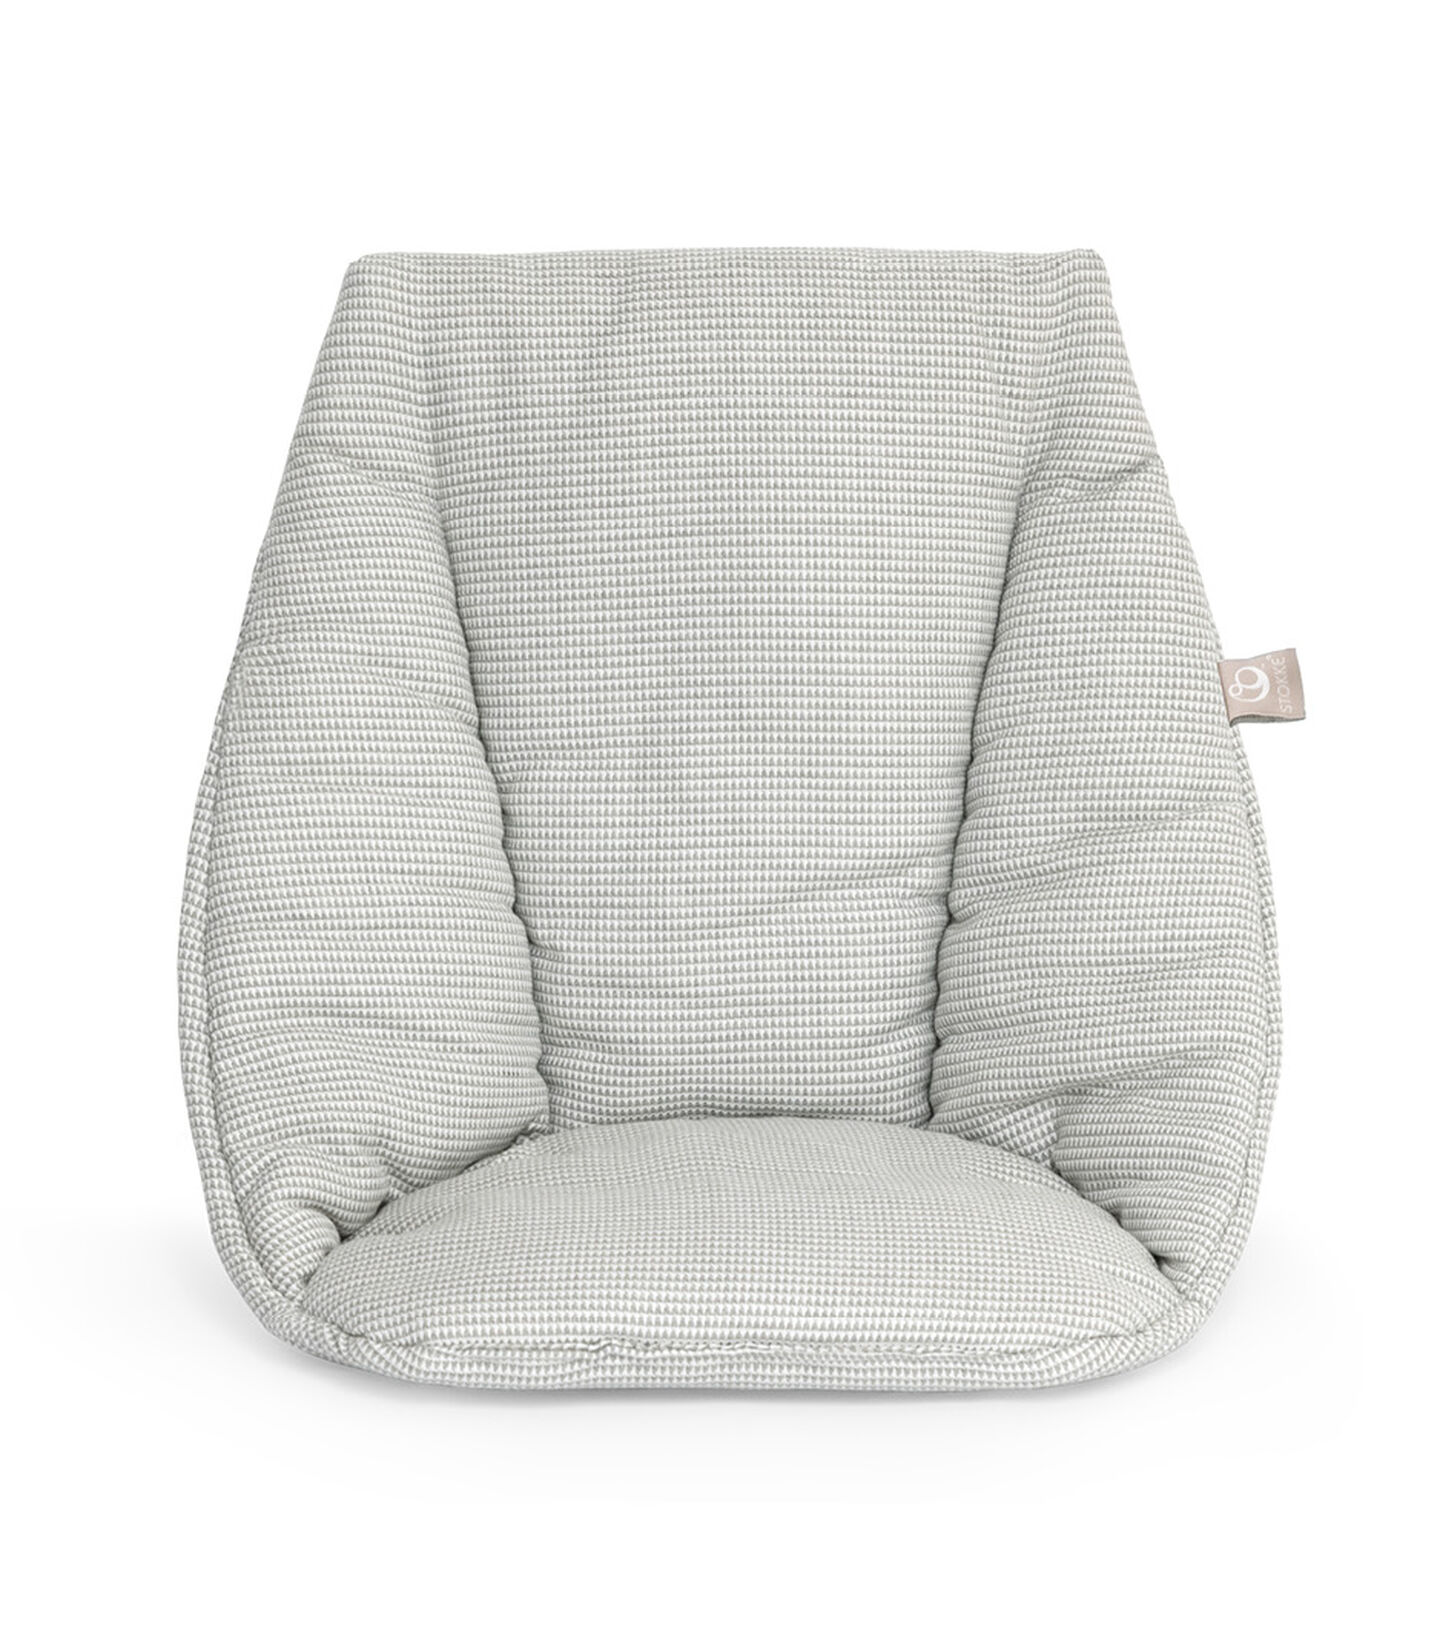 Подушка для малышей Mini на стульчик Tripp Trapp® Nordic Grey, Nordic Grey / Скандинавский серый, mainview view 1